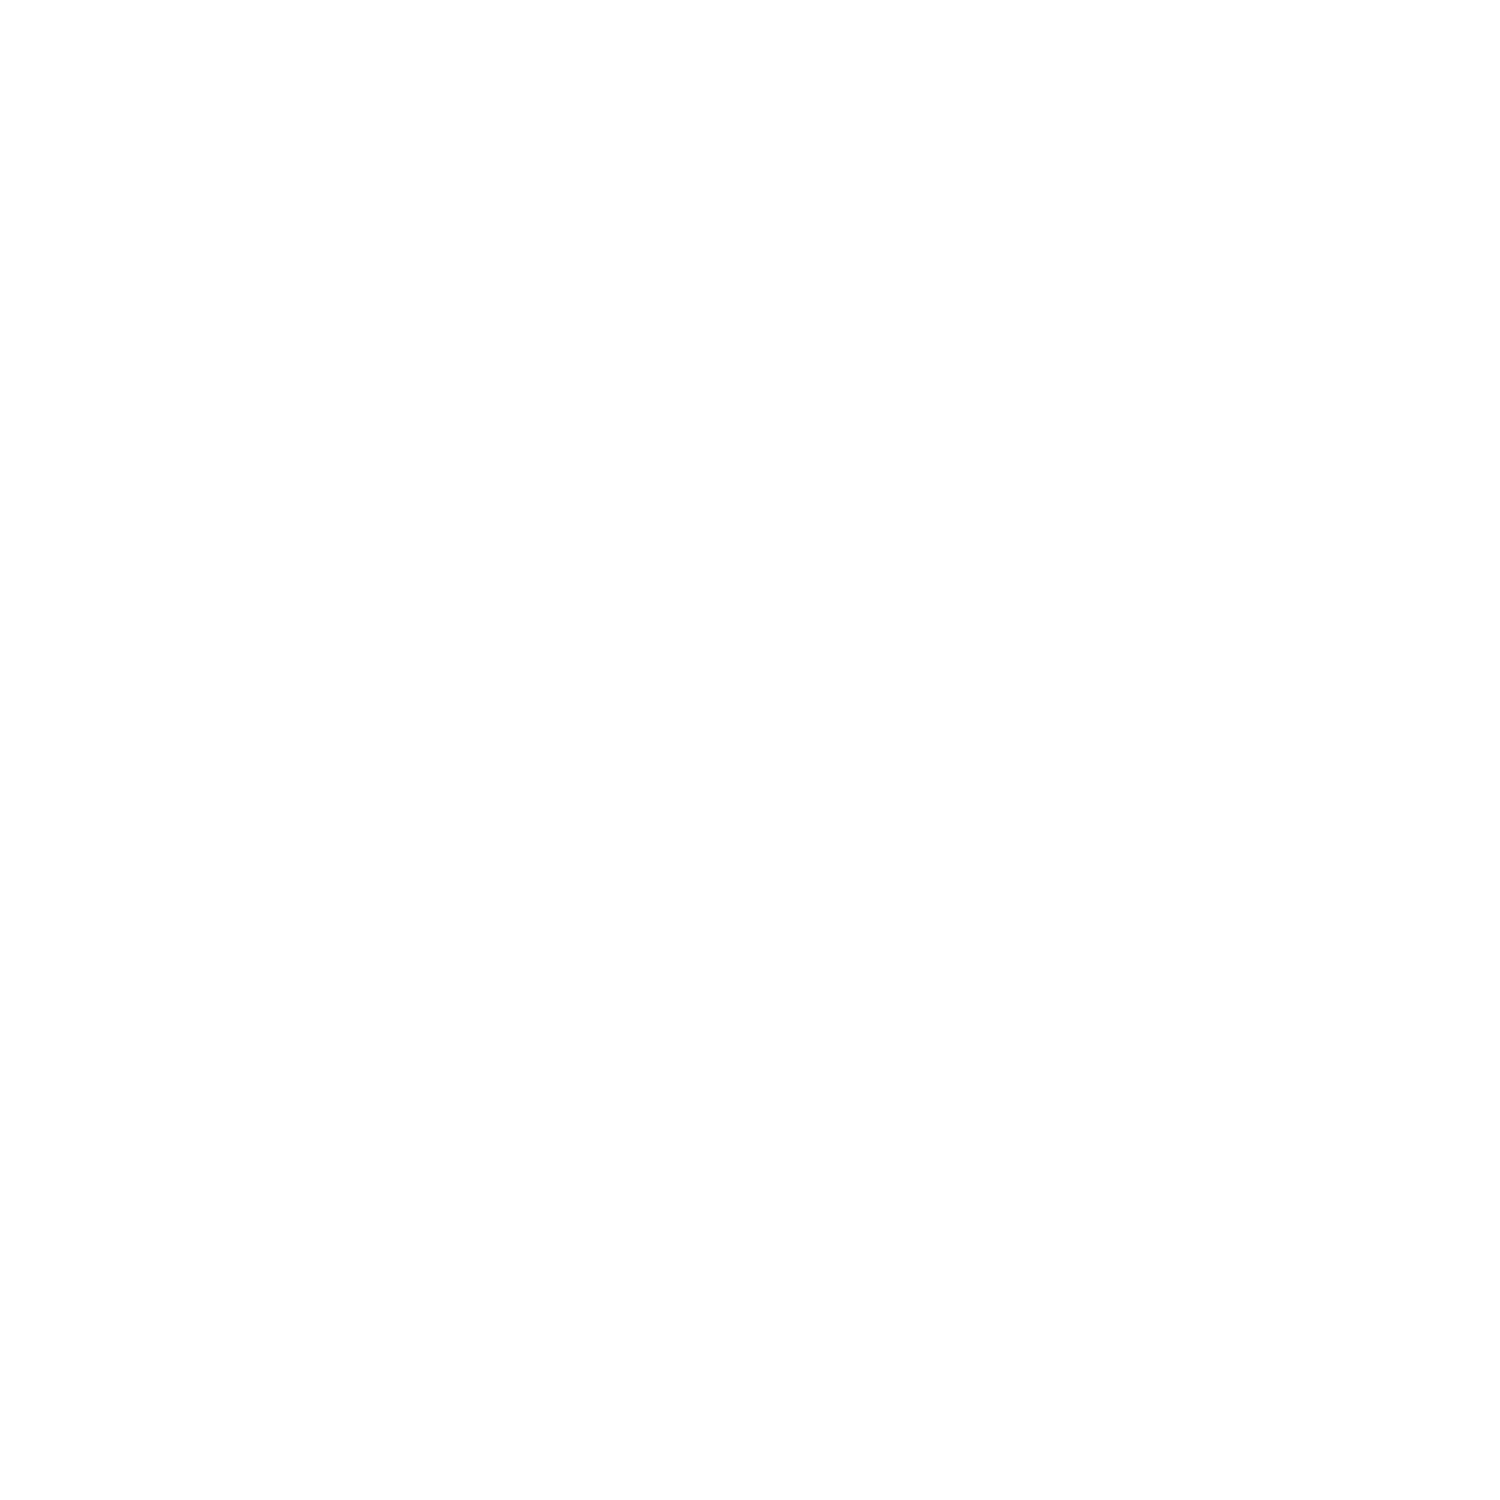 Best Vet Hospital In Mechanicsburg, PA | Good Hope AH